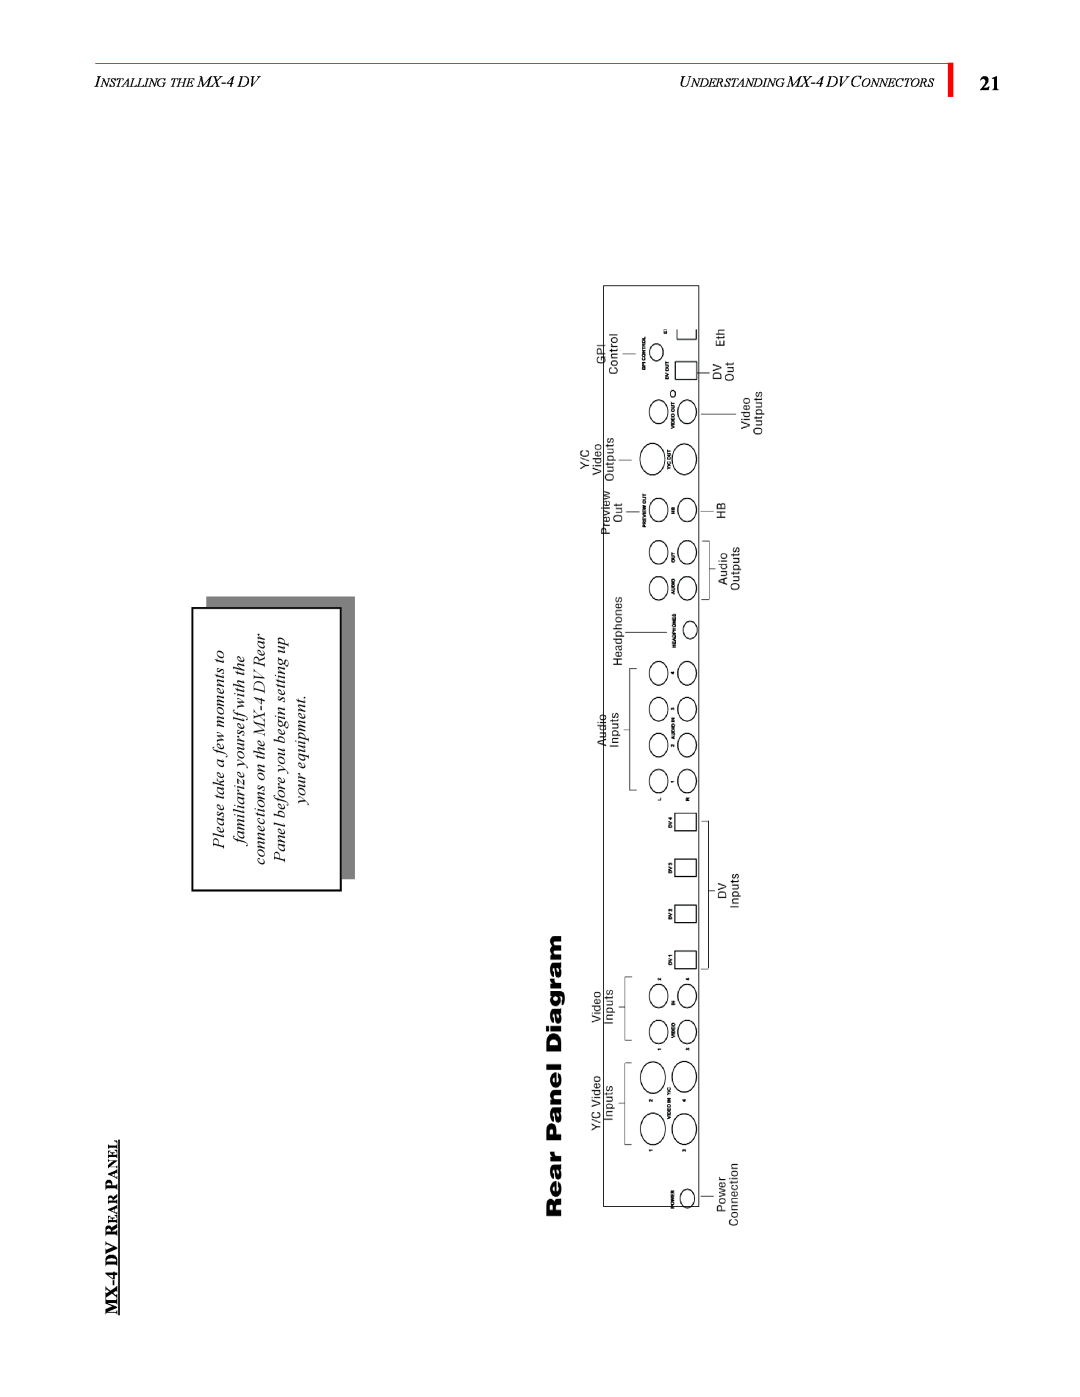 FOCUS Enhancements MX-4DV manual MX-4 DV REAR PANEL, INSTALLING THE MX-4 DV, UNDERSTANDING MX-4 DV CONNECTORS 